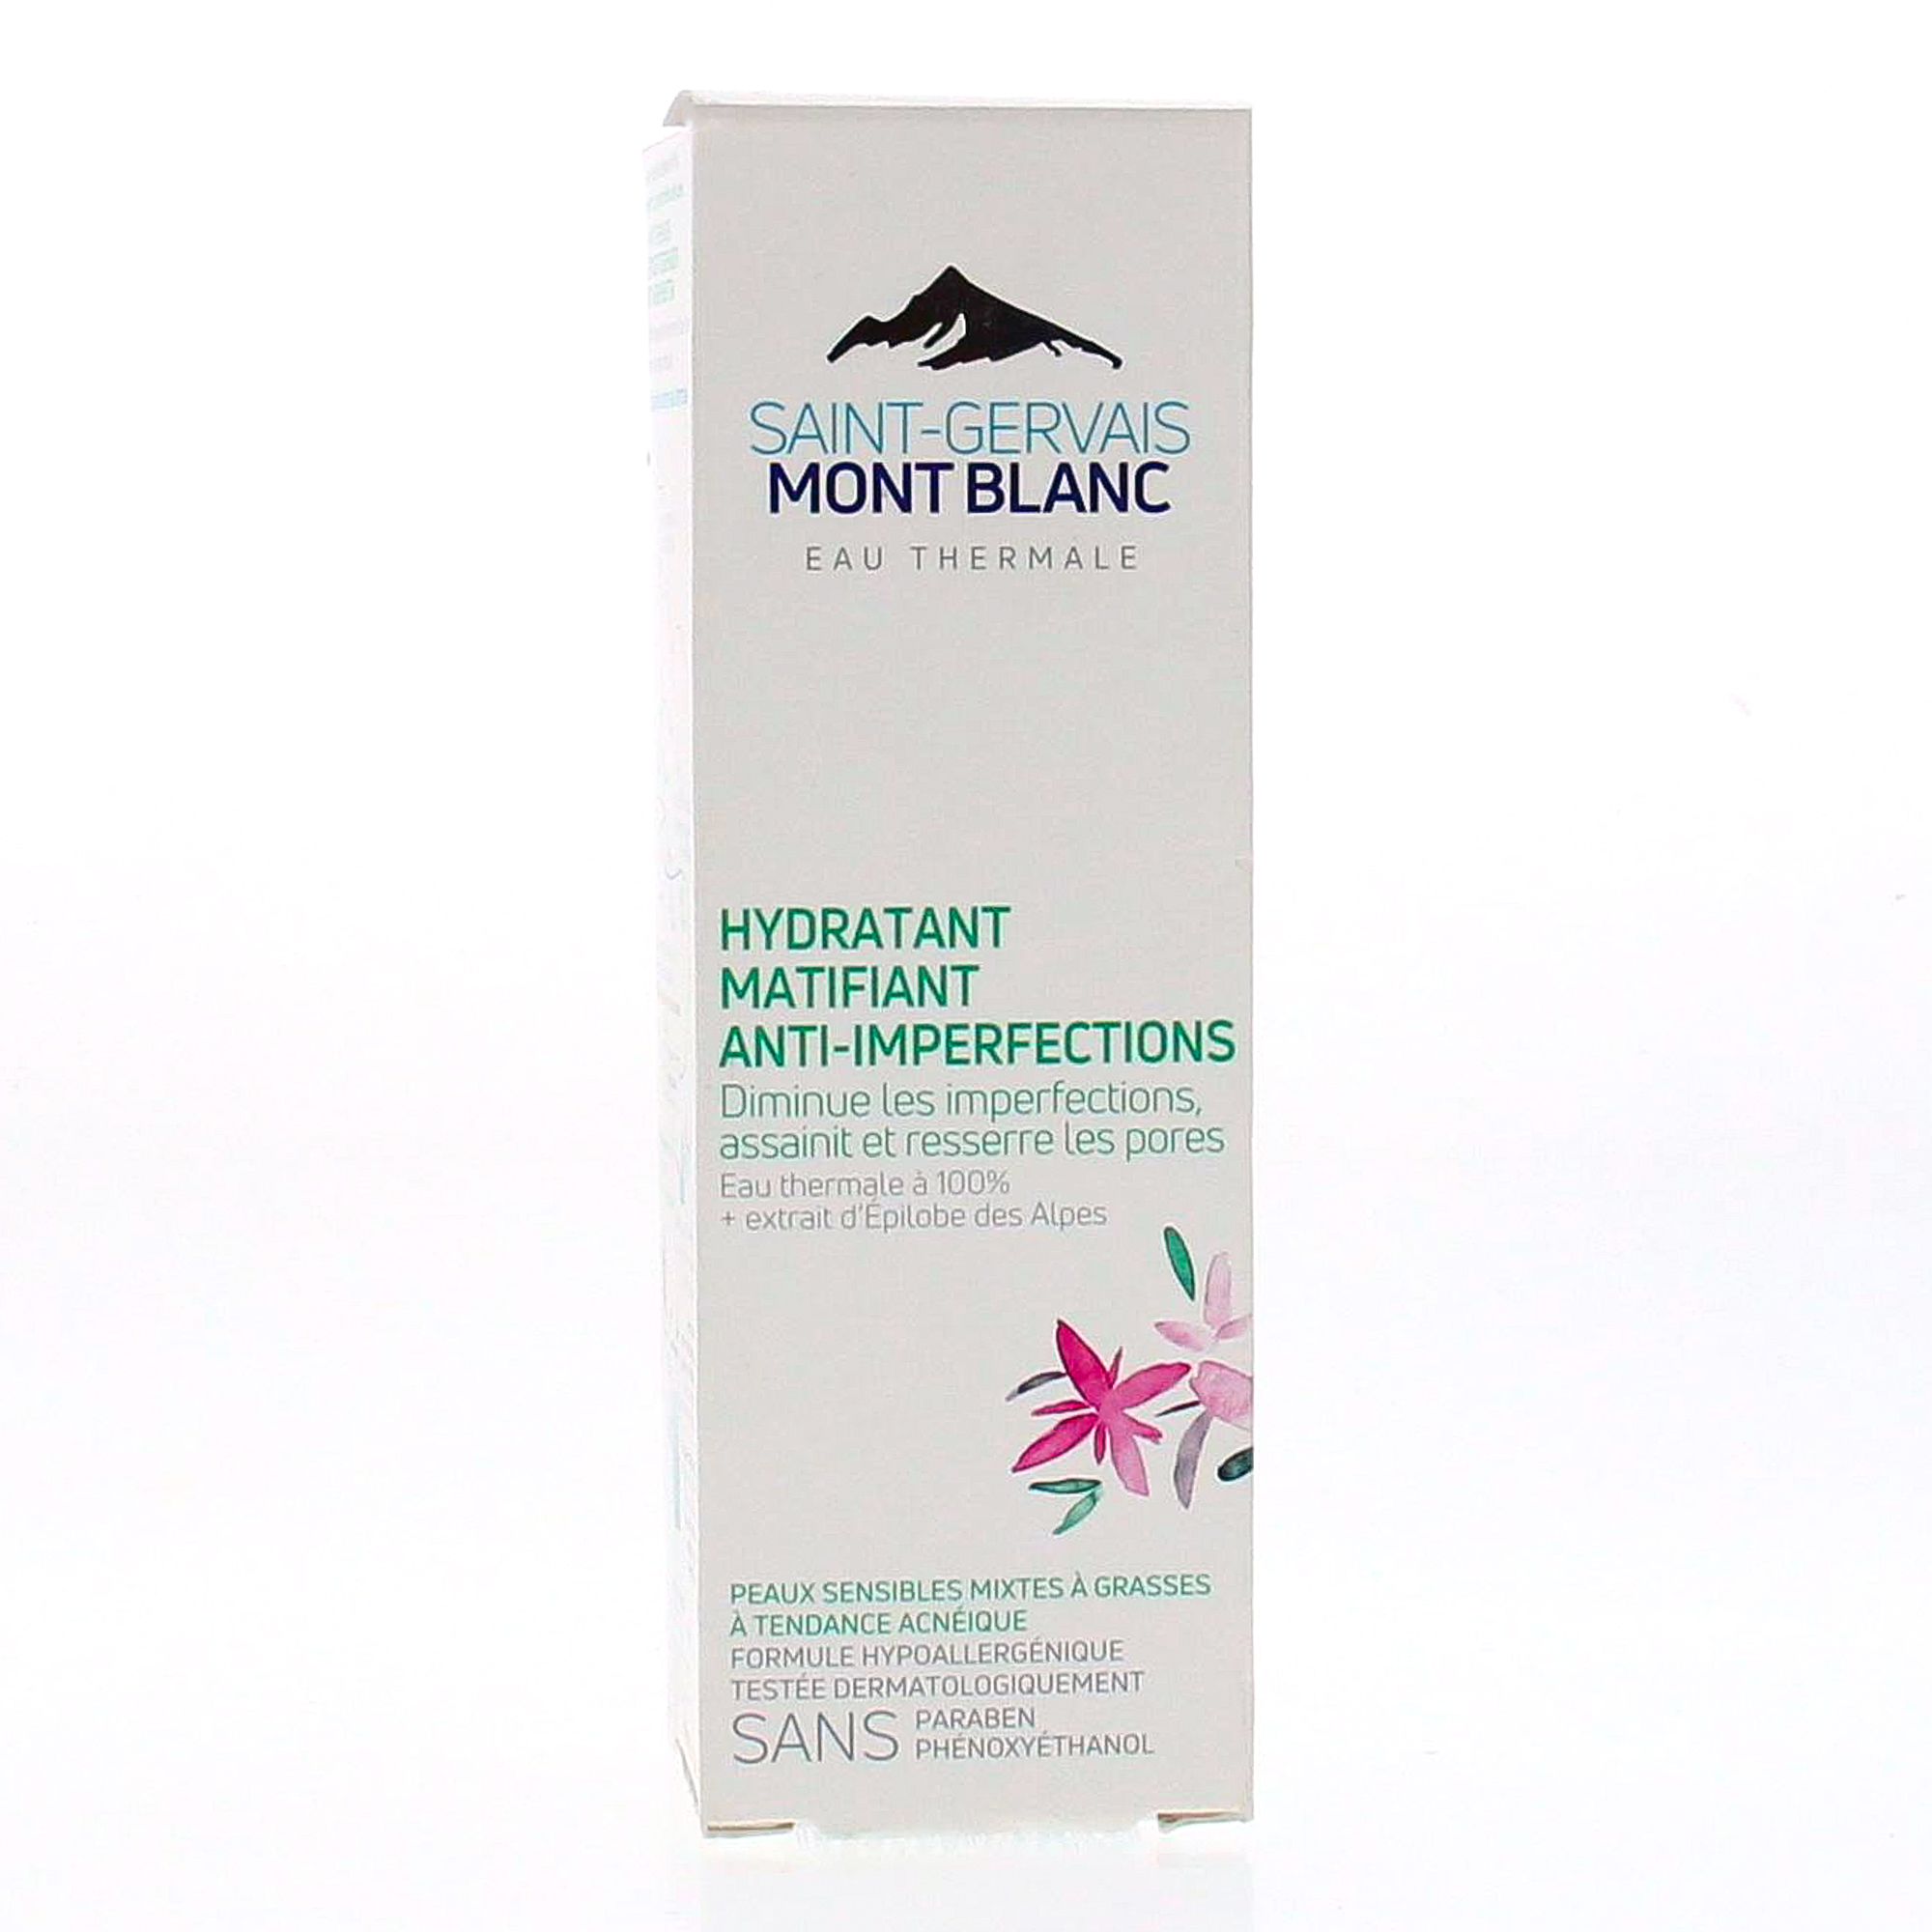 Saint-Gervais Mont Blanc soin matifiant anti-imperfections 40ml